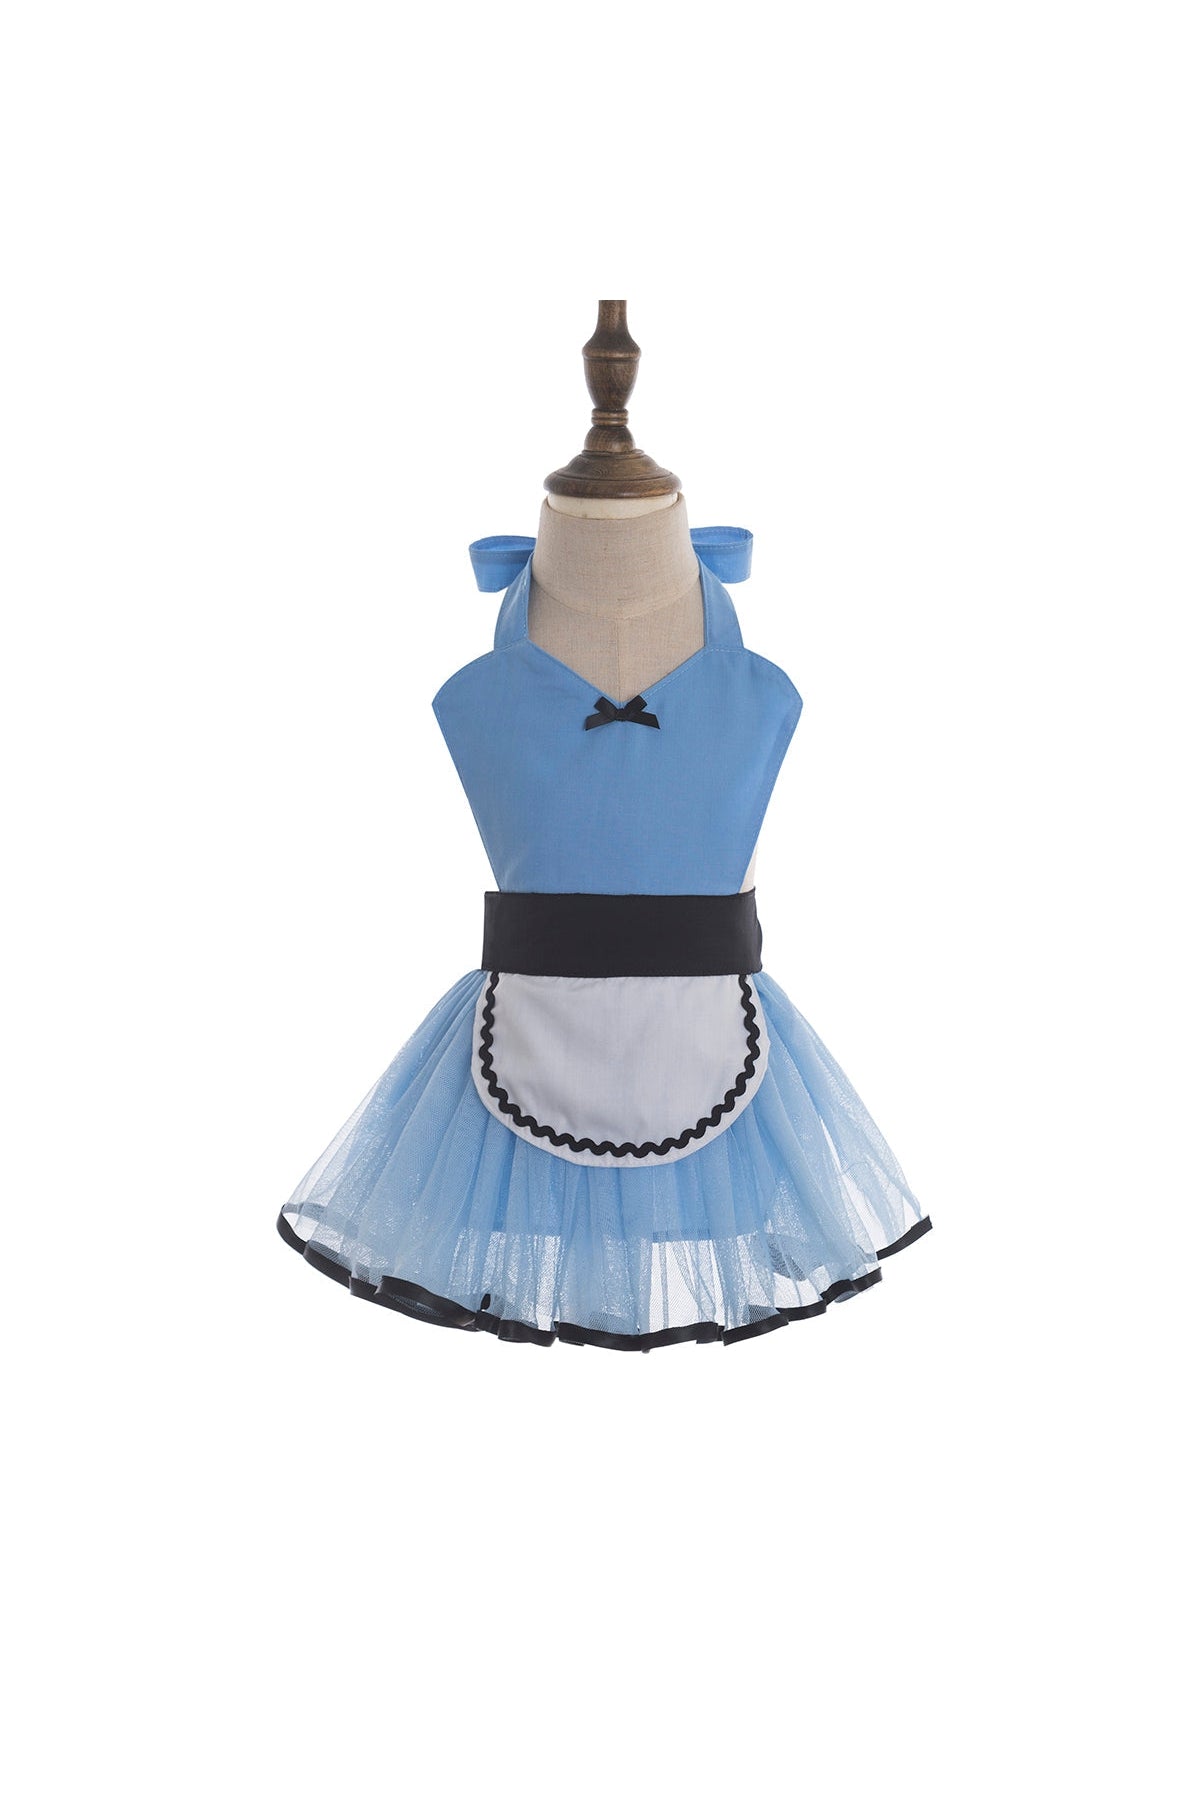 Apron Mini - Princess inspired - Alice